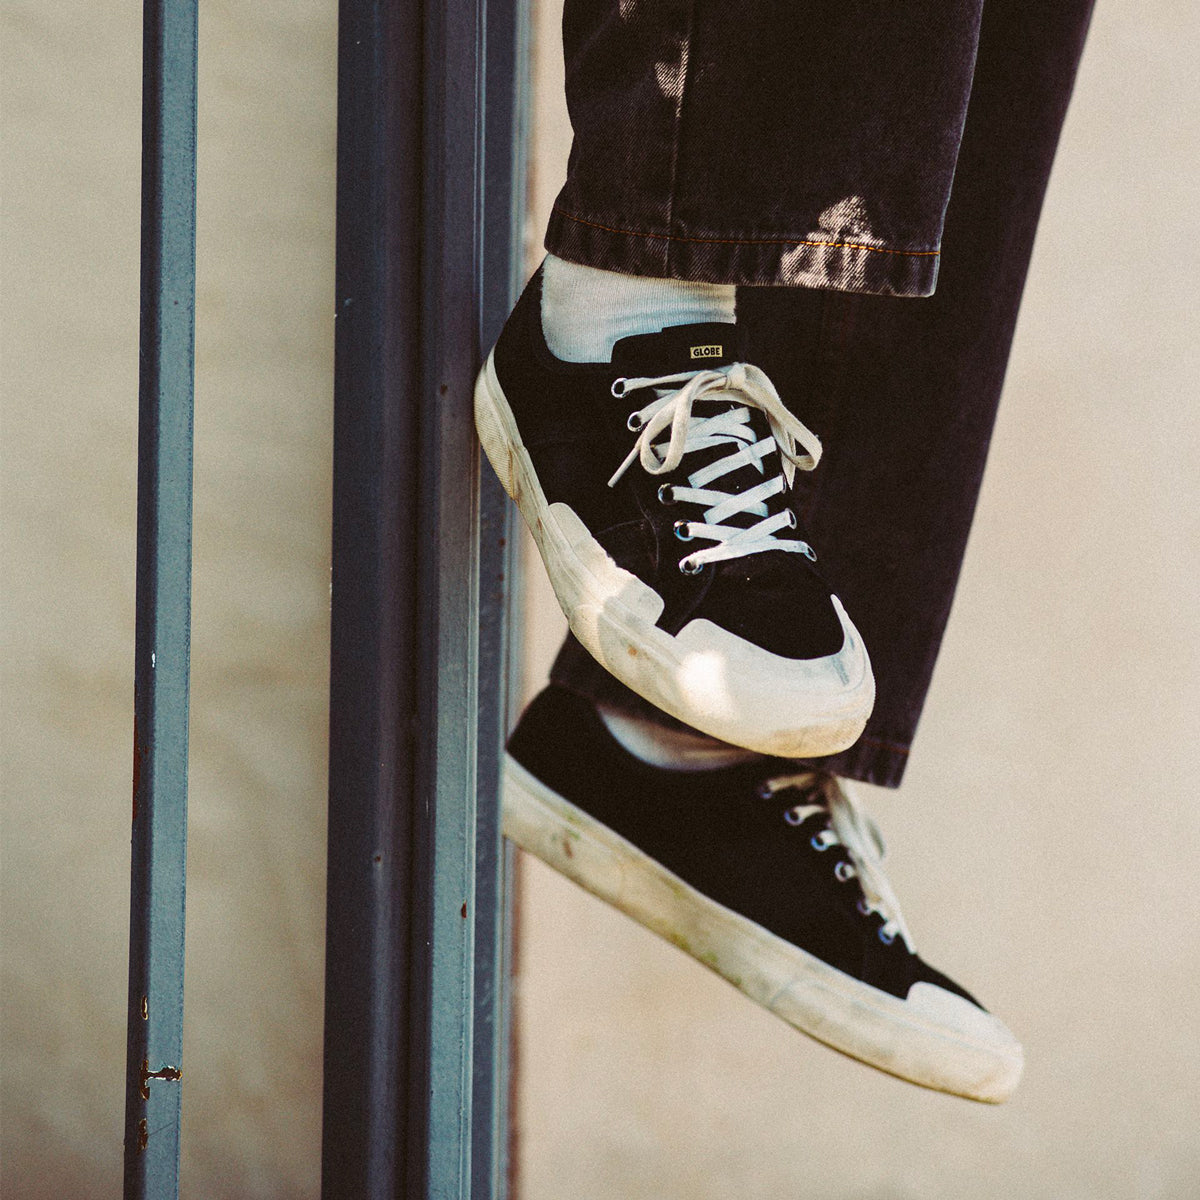 Surplus Black/Cream/Montano skate shoes